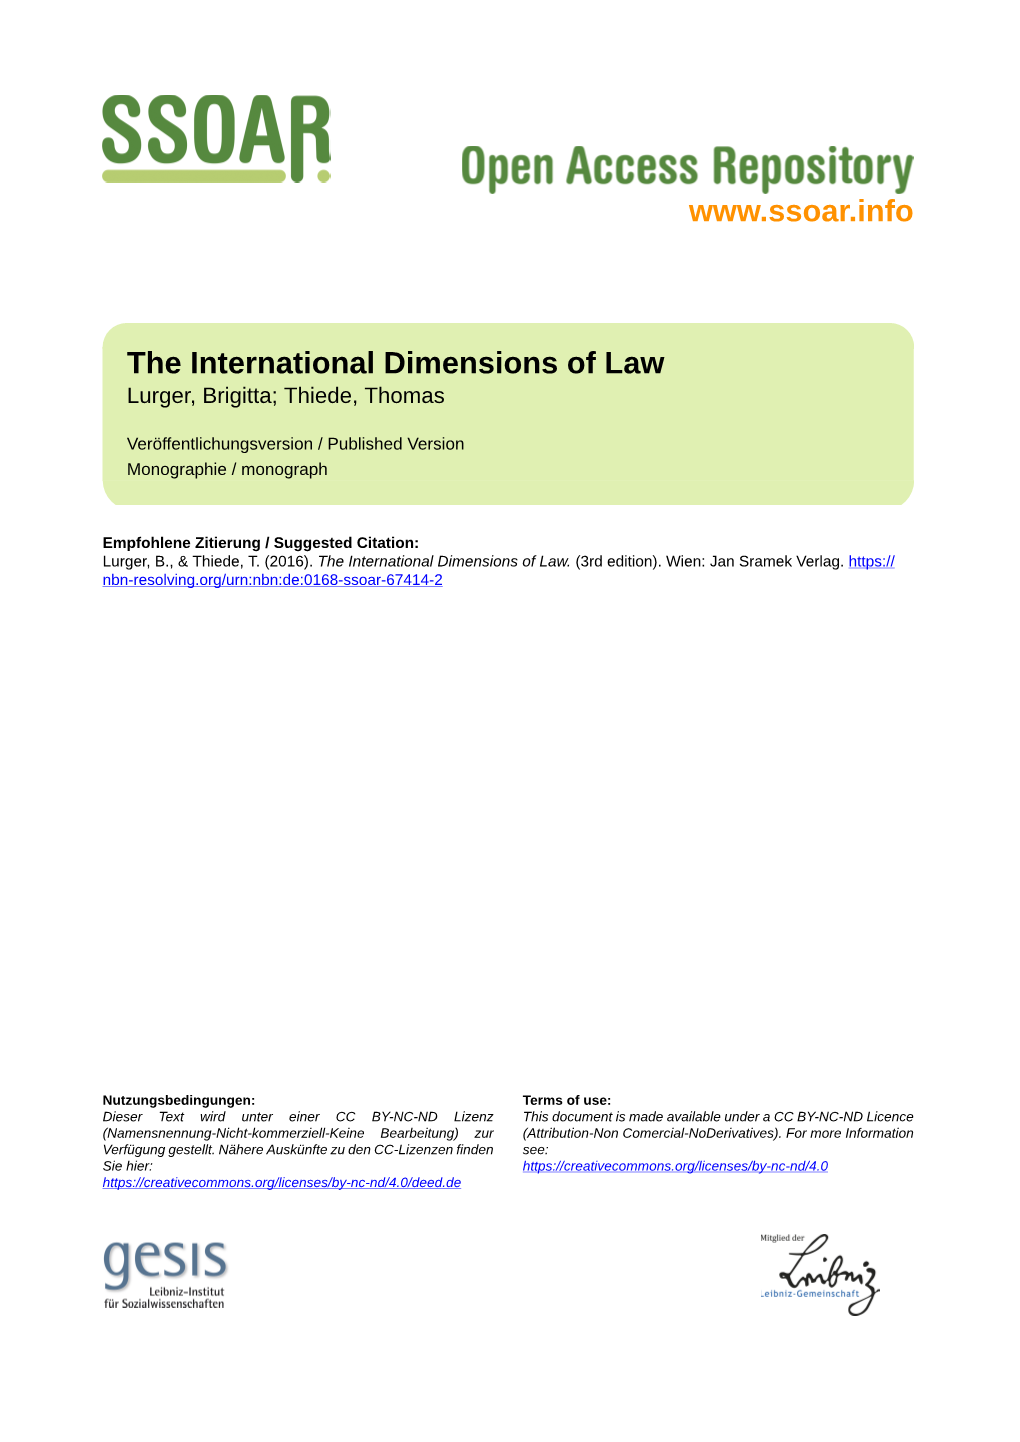 The International Dimensions of Law Lurger, Brigitta; Thiede, Thomas